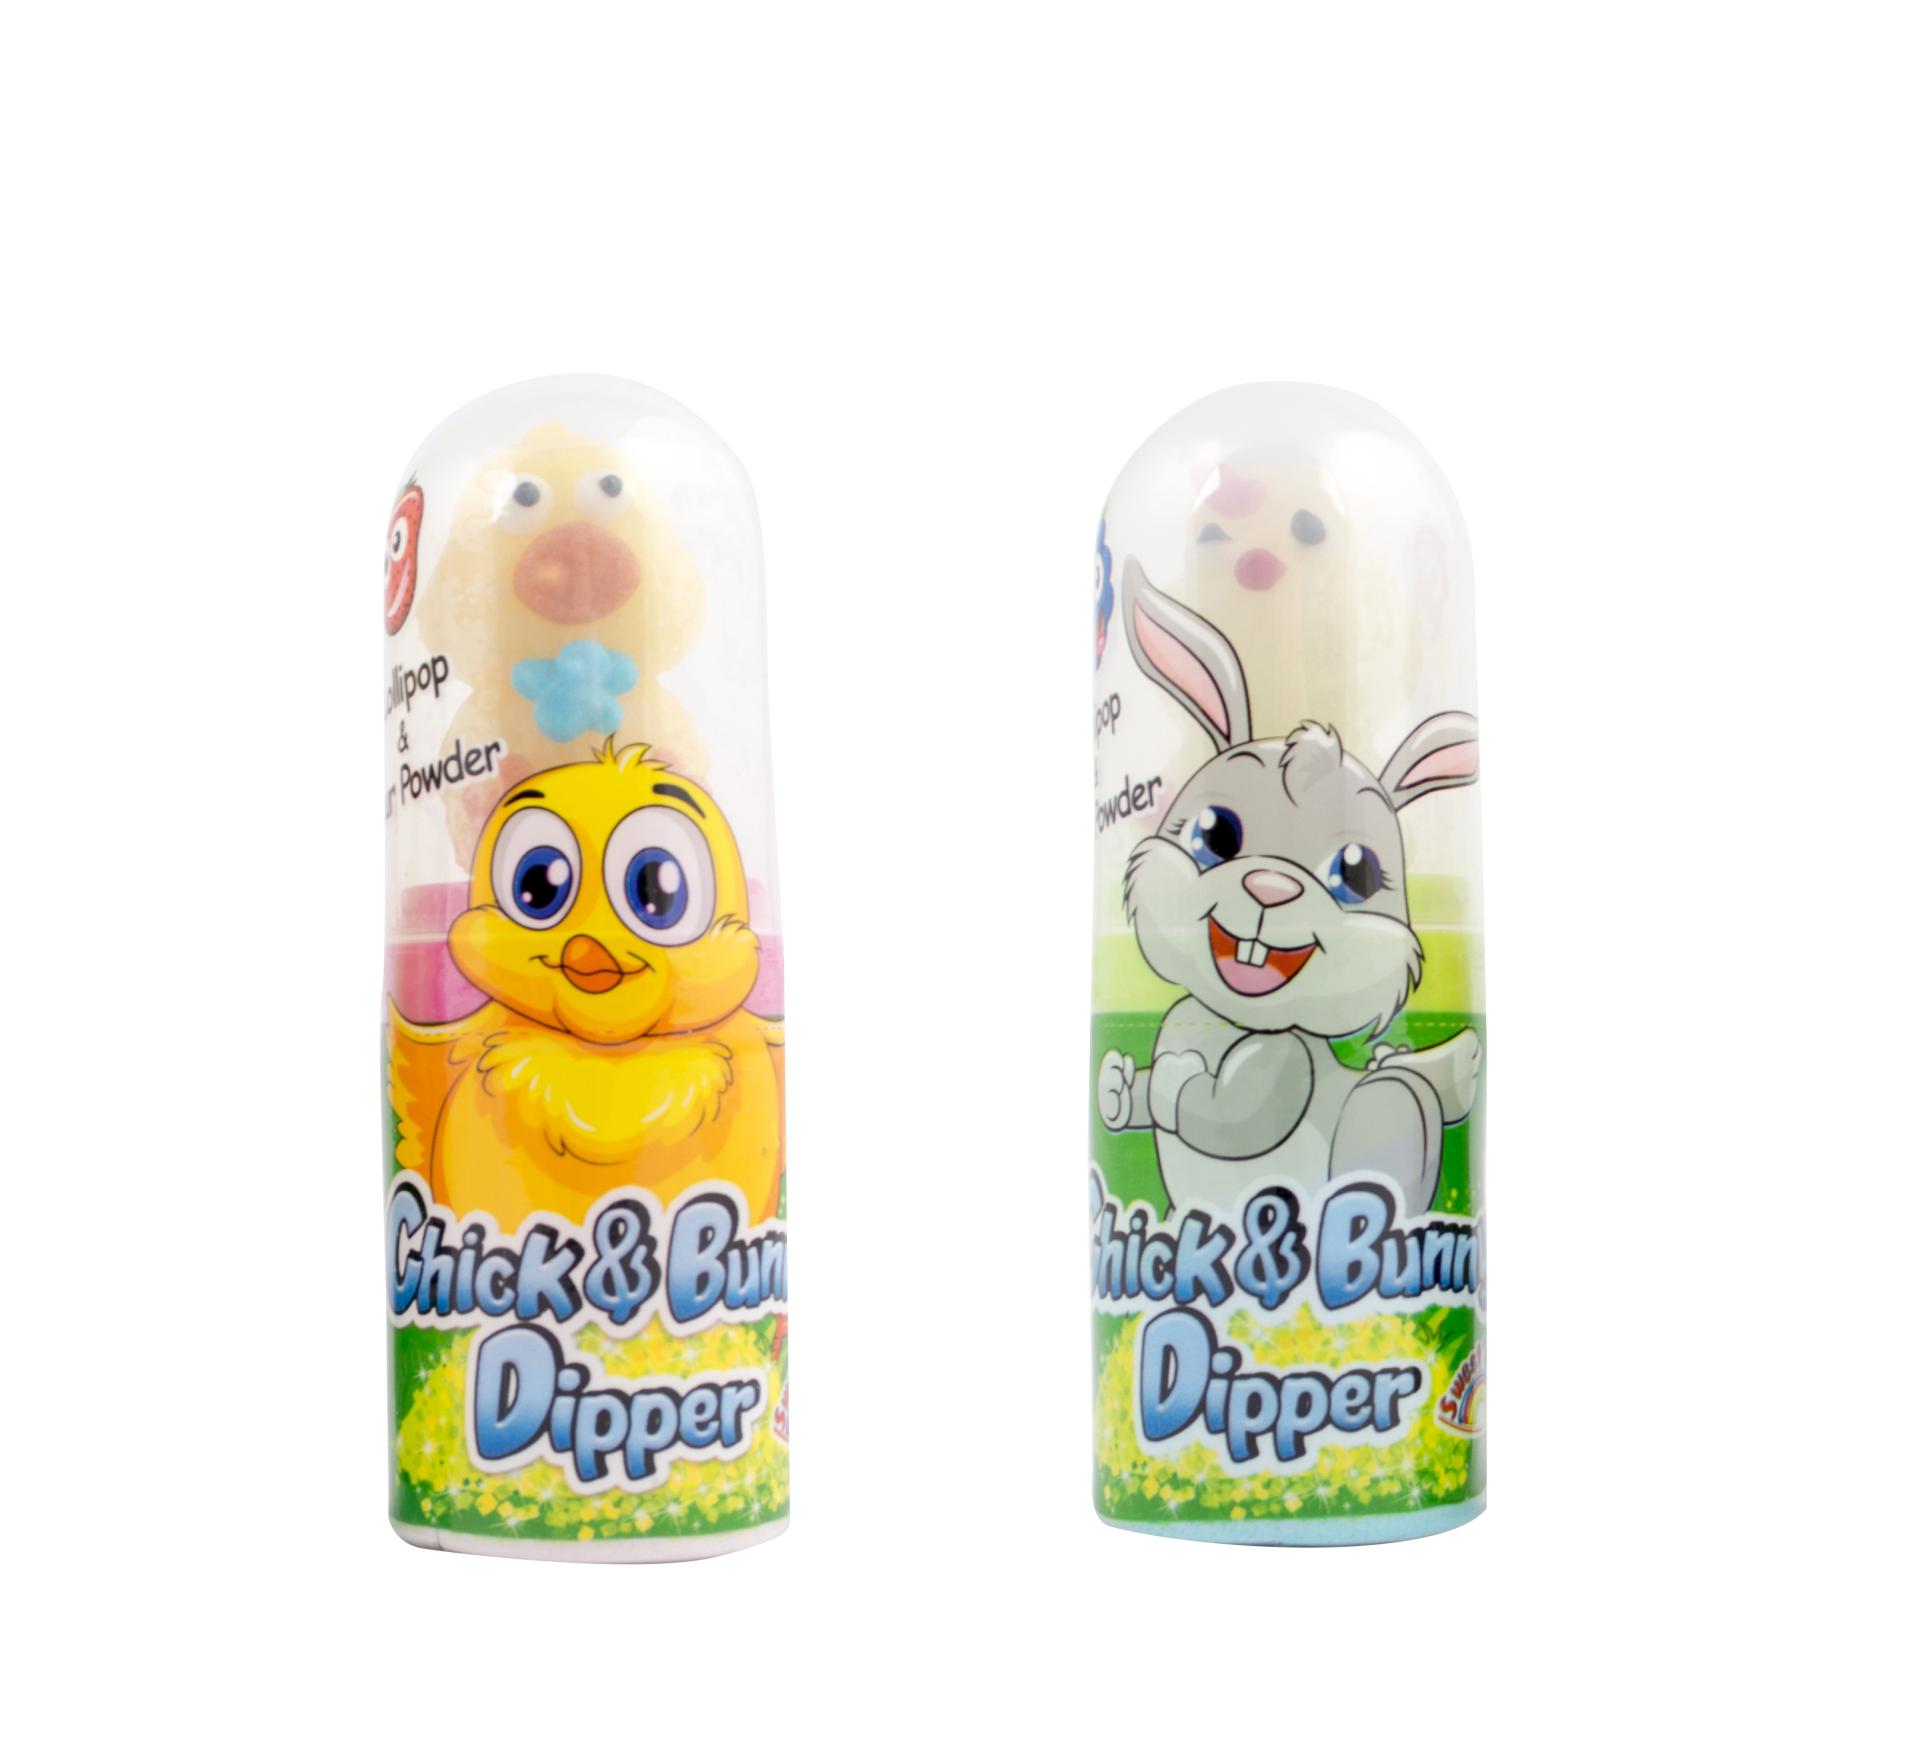 Chick & Bunny Dipper lízanka+cukr. prášok 40g